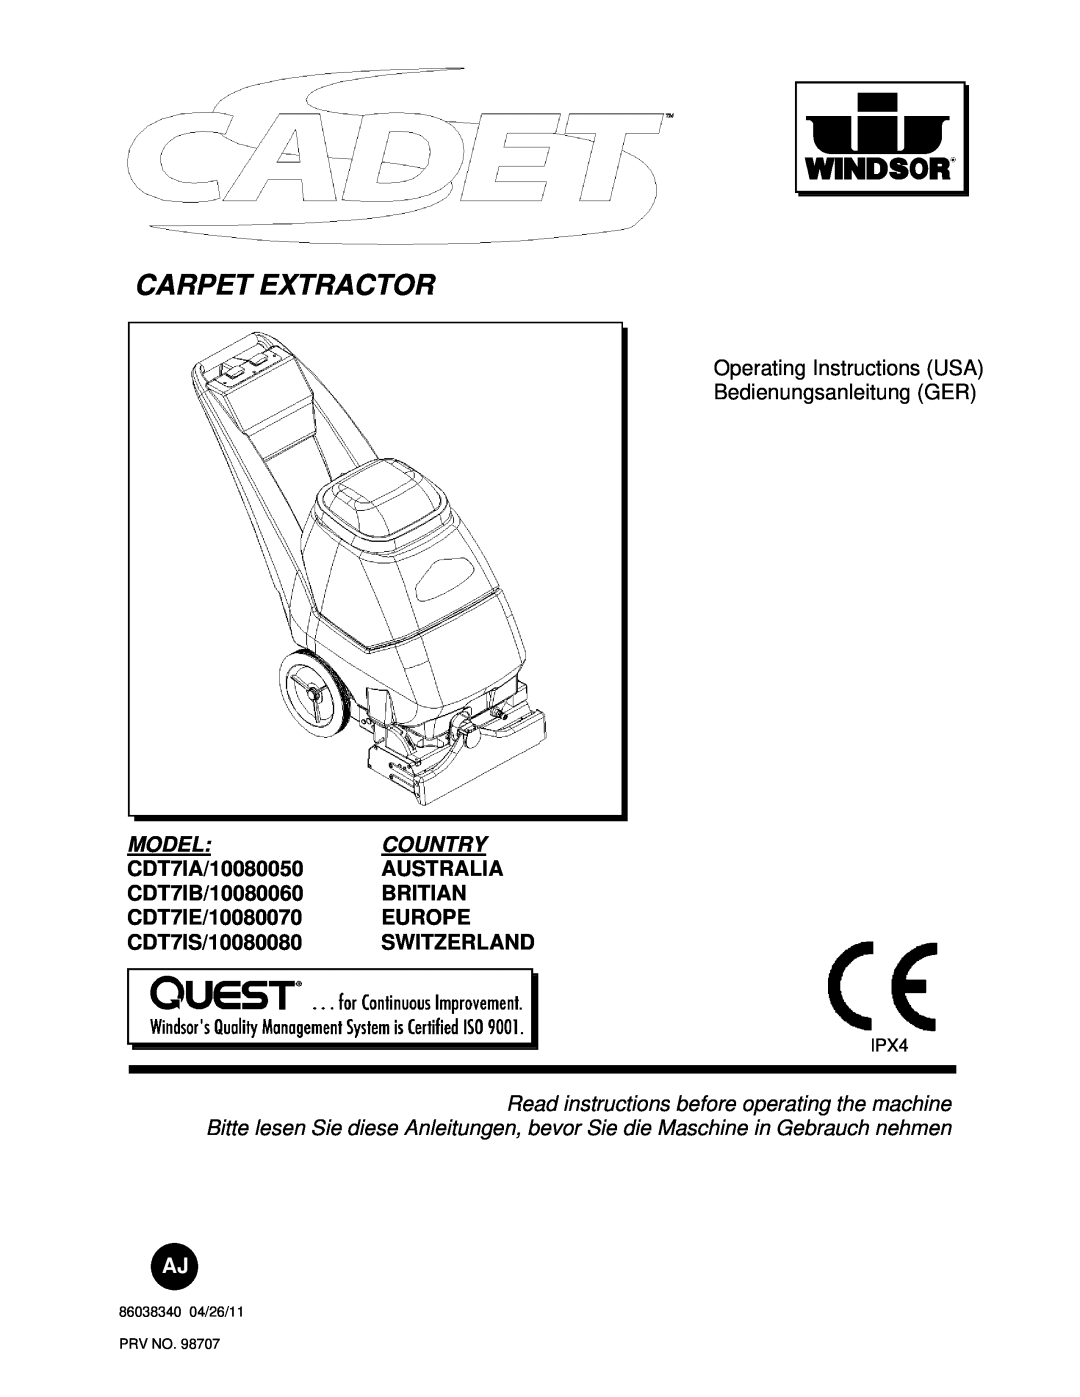 Windsor CDT7IB/10080060, CDT7IE/10080070, CDT7IS/10080080 manual Carpet Extractor, Model Country, 86038340 04/26/11 PRV NO 